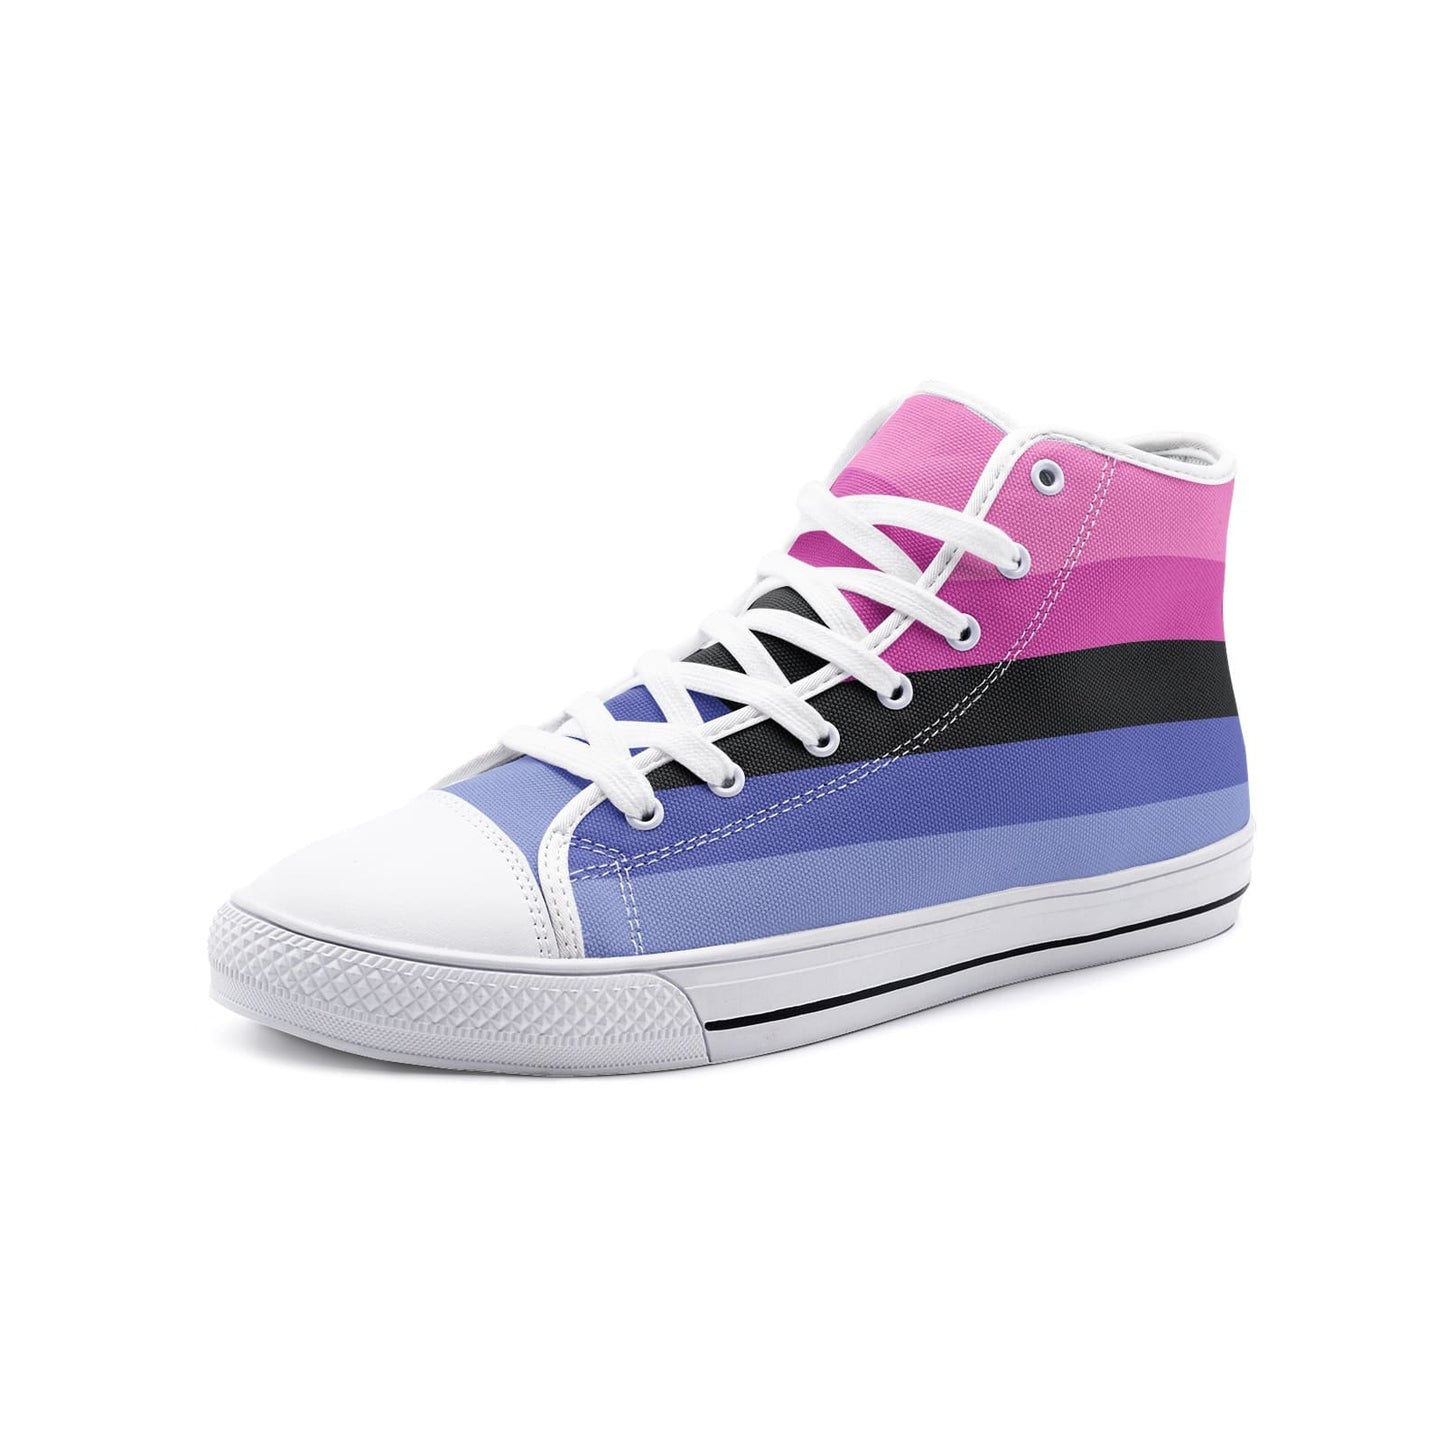 omnisexual shoes, omni pride flag sneakers, white